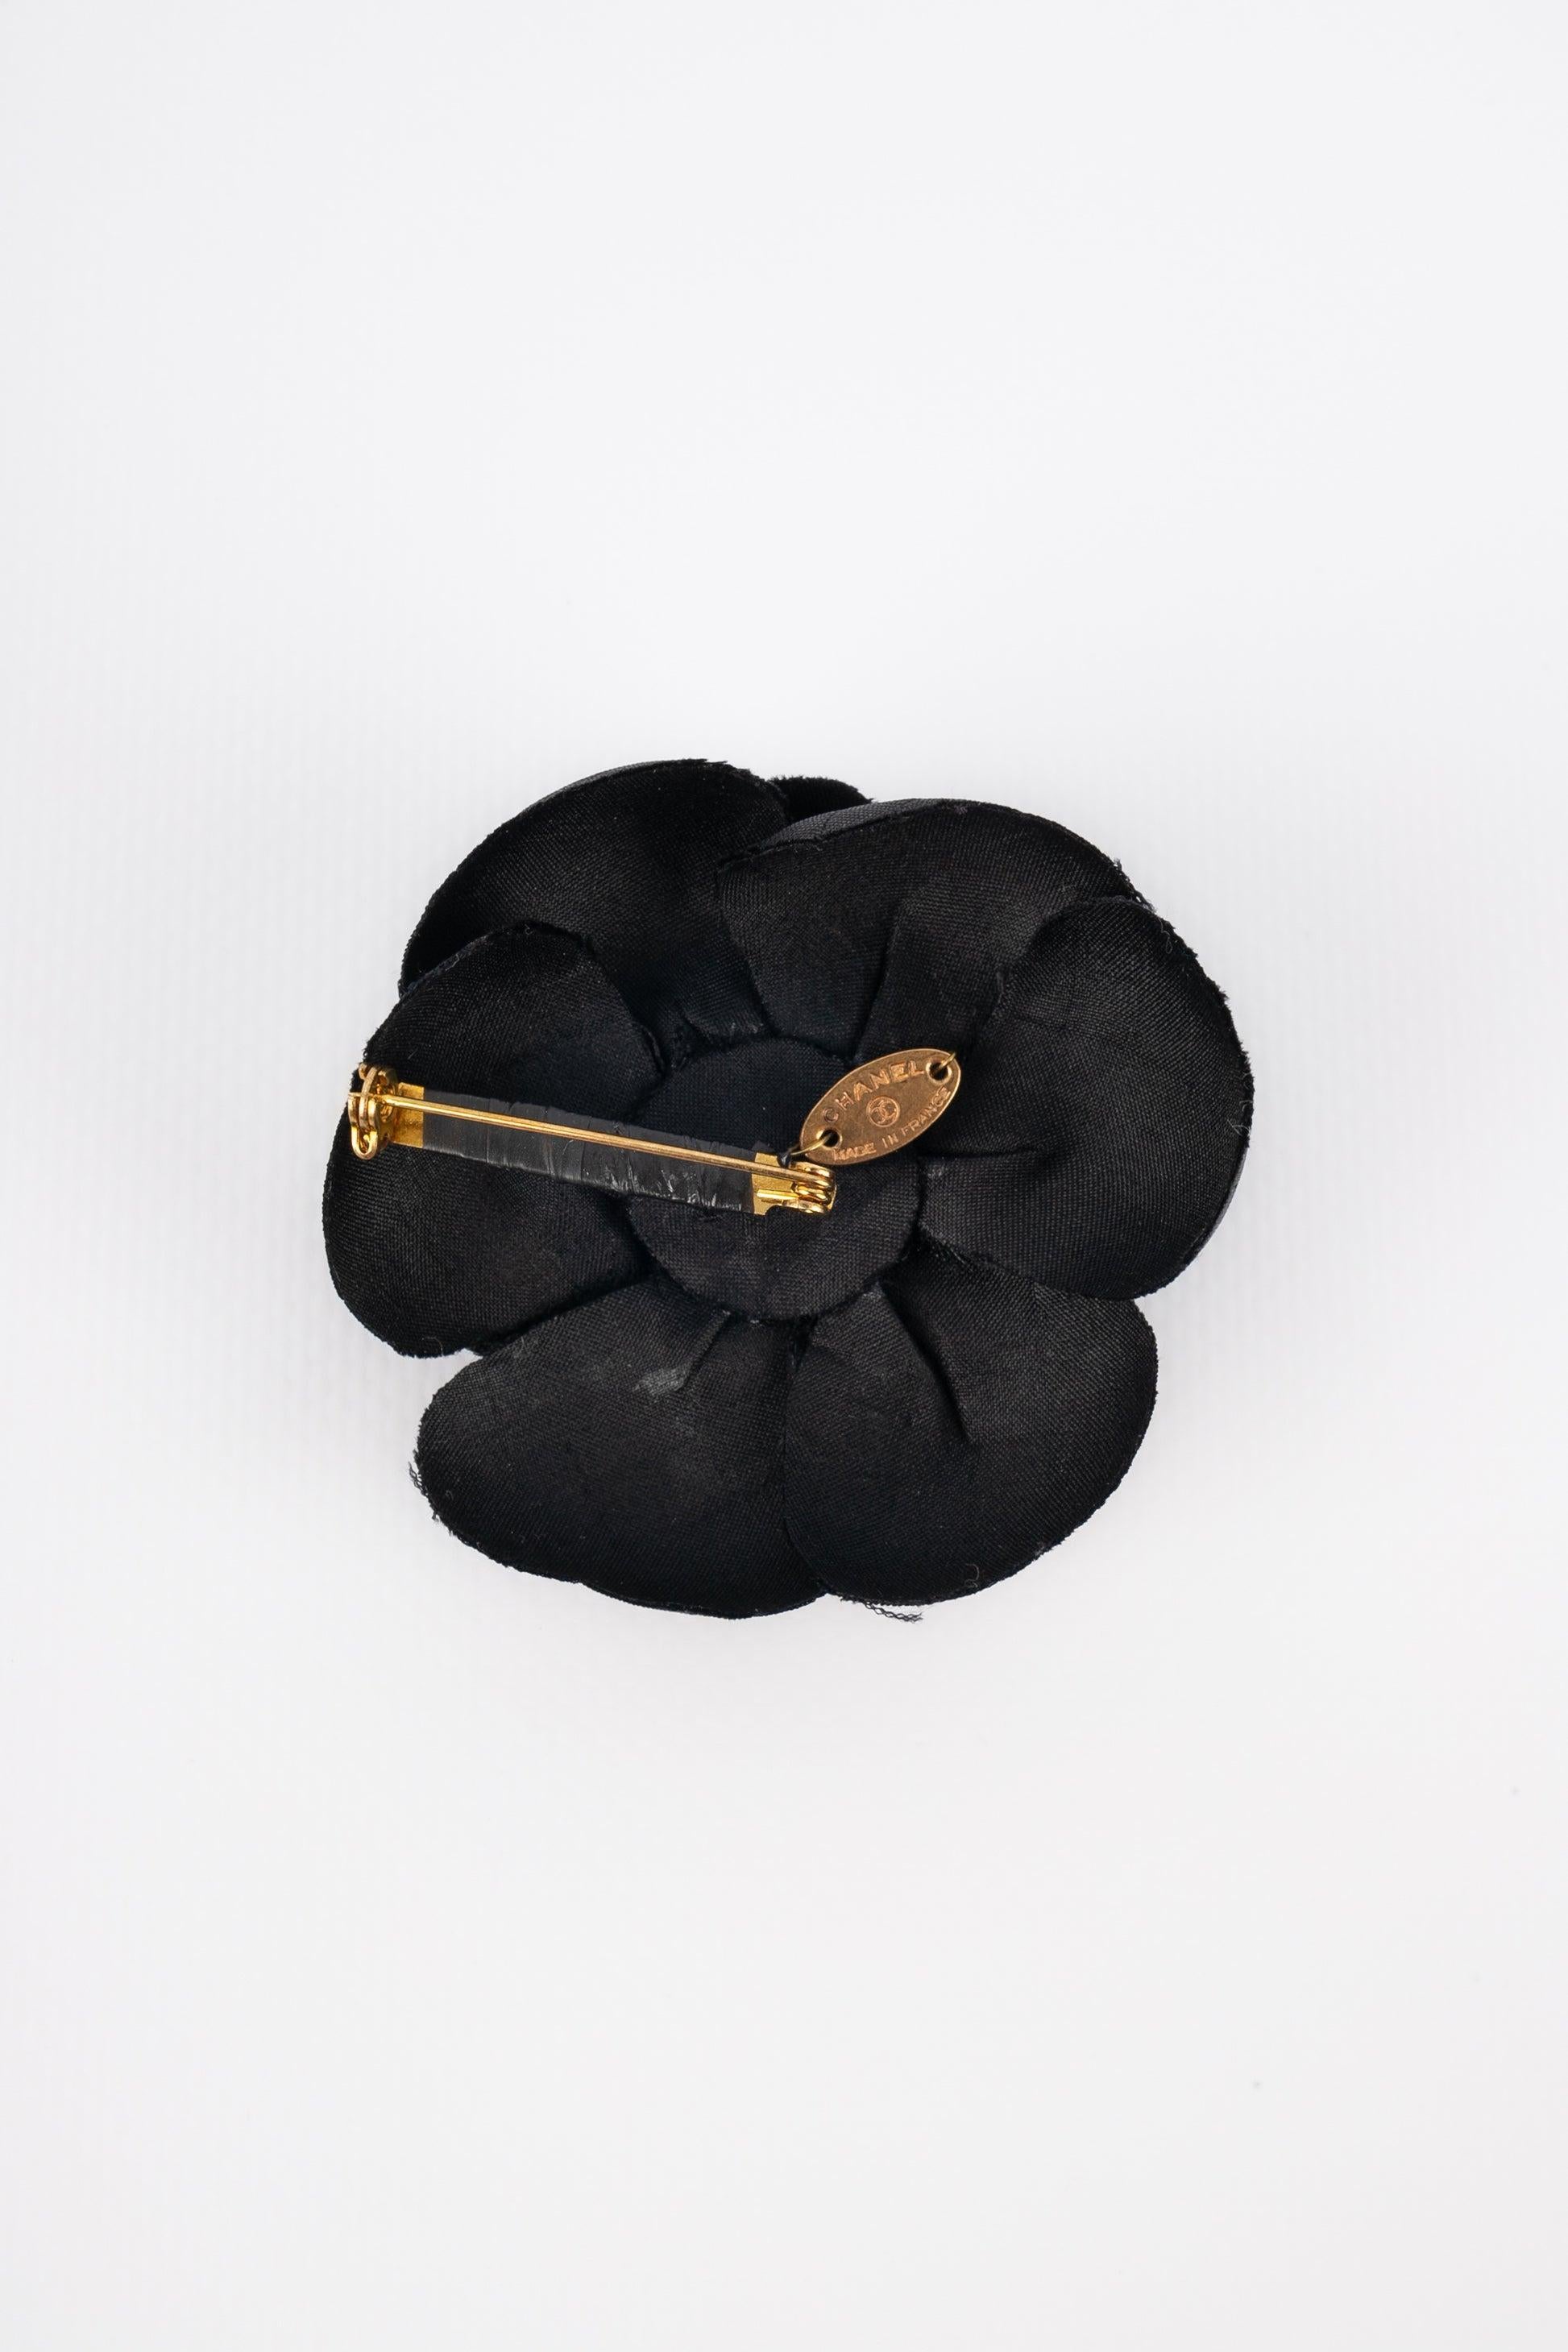 Women's Chanel Black Woven Fabric Camellia Brooch